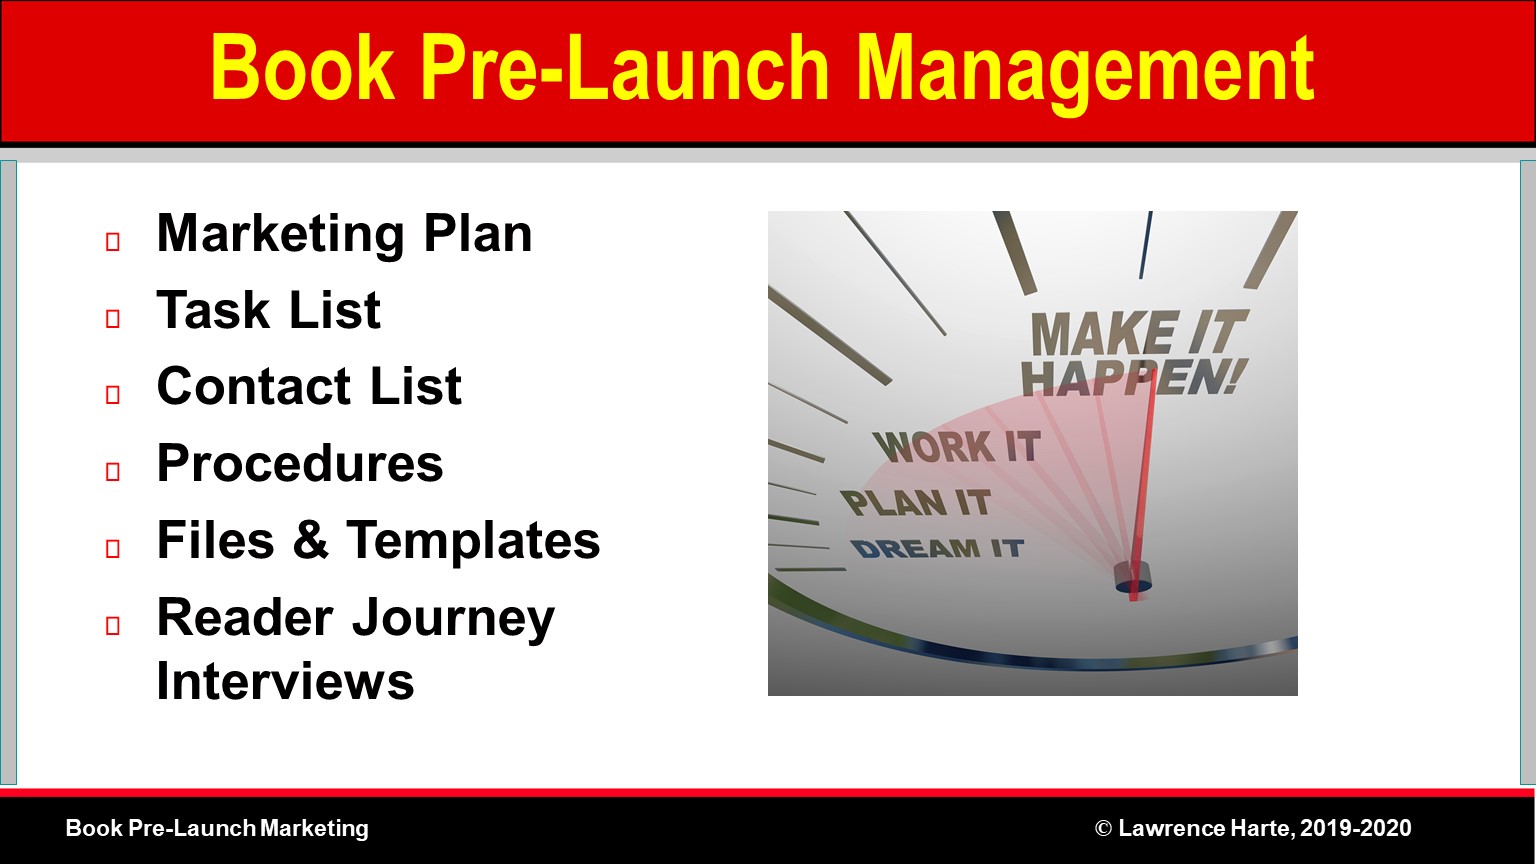 Book Pre-Launch Marketing Management